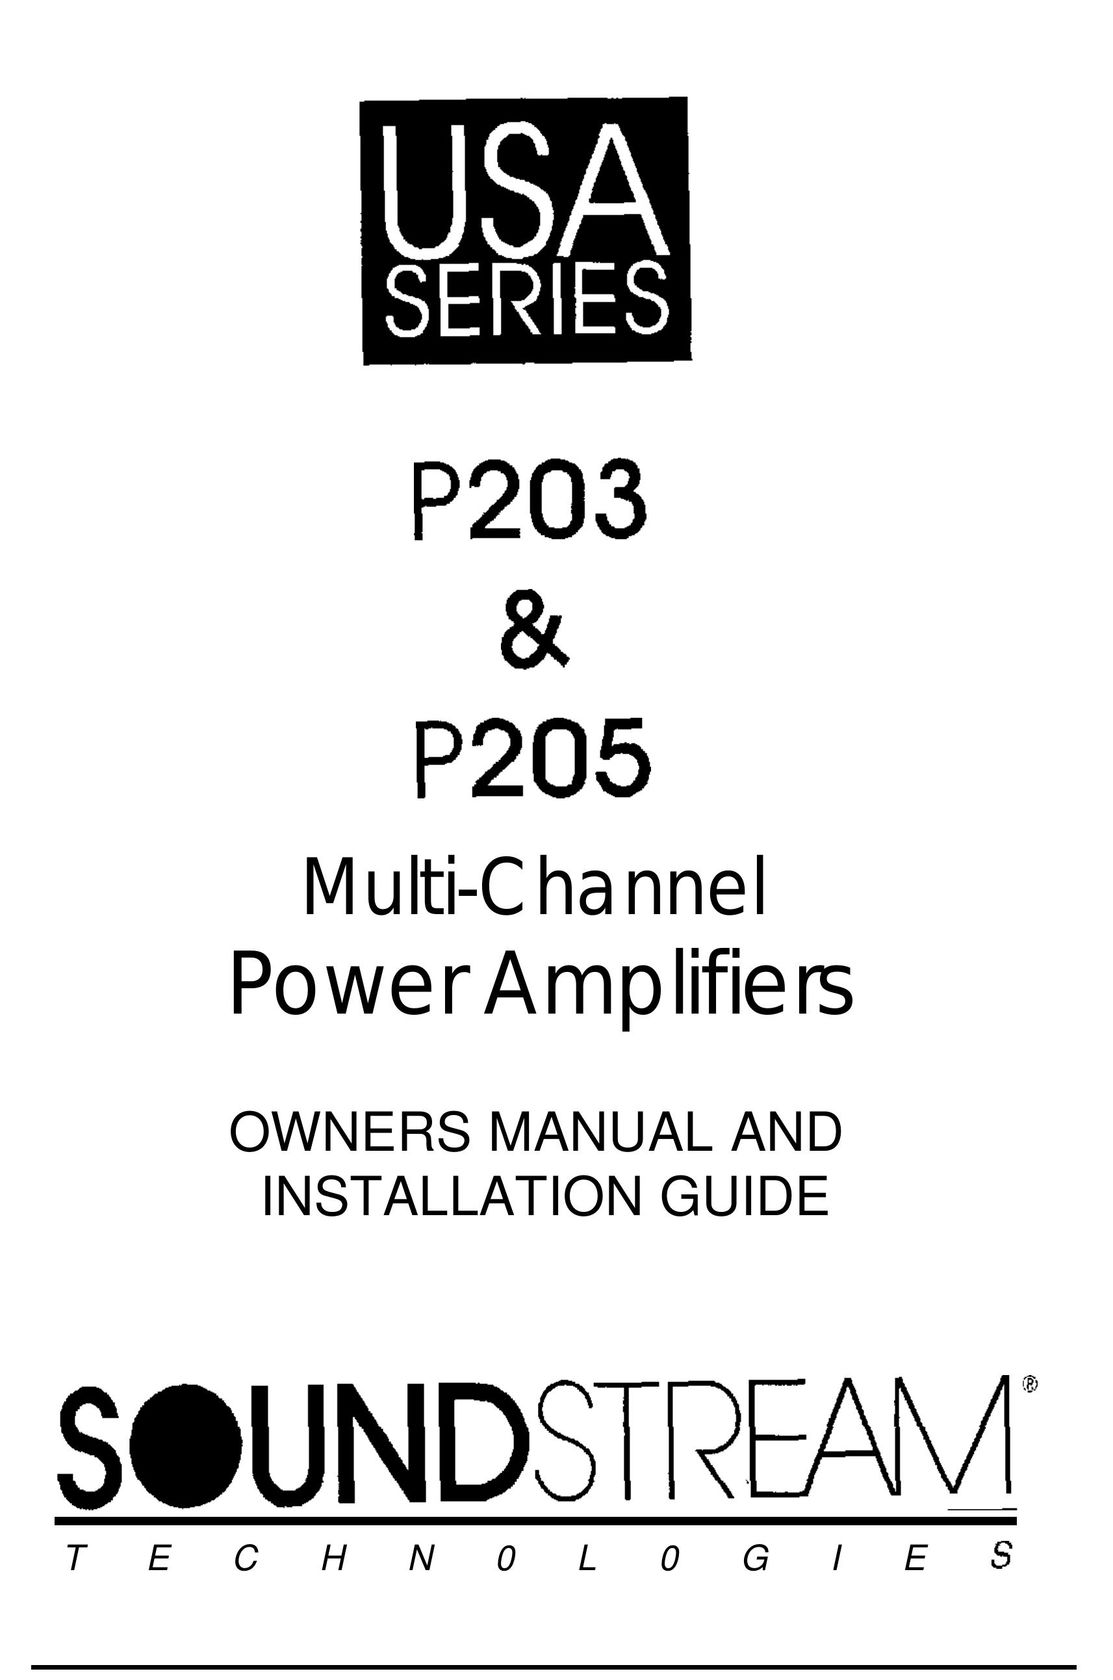 Soundstream Technologies P203 Stereo Amplifier User Manual